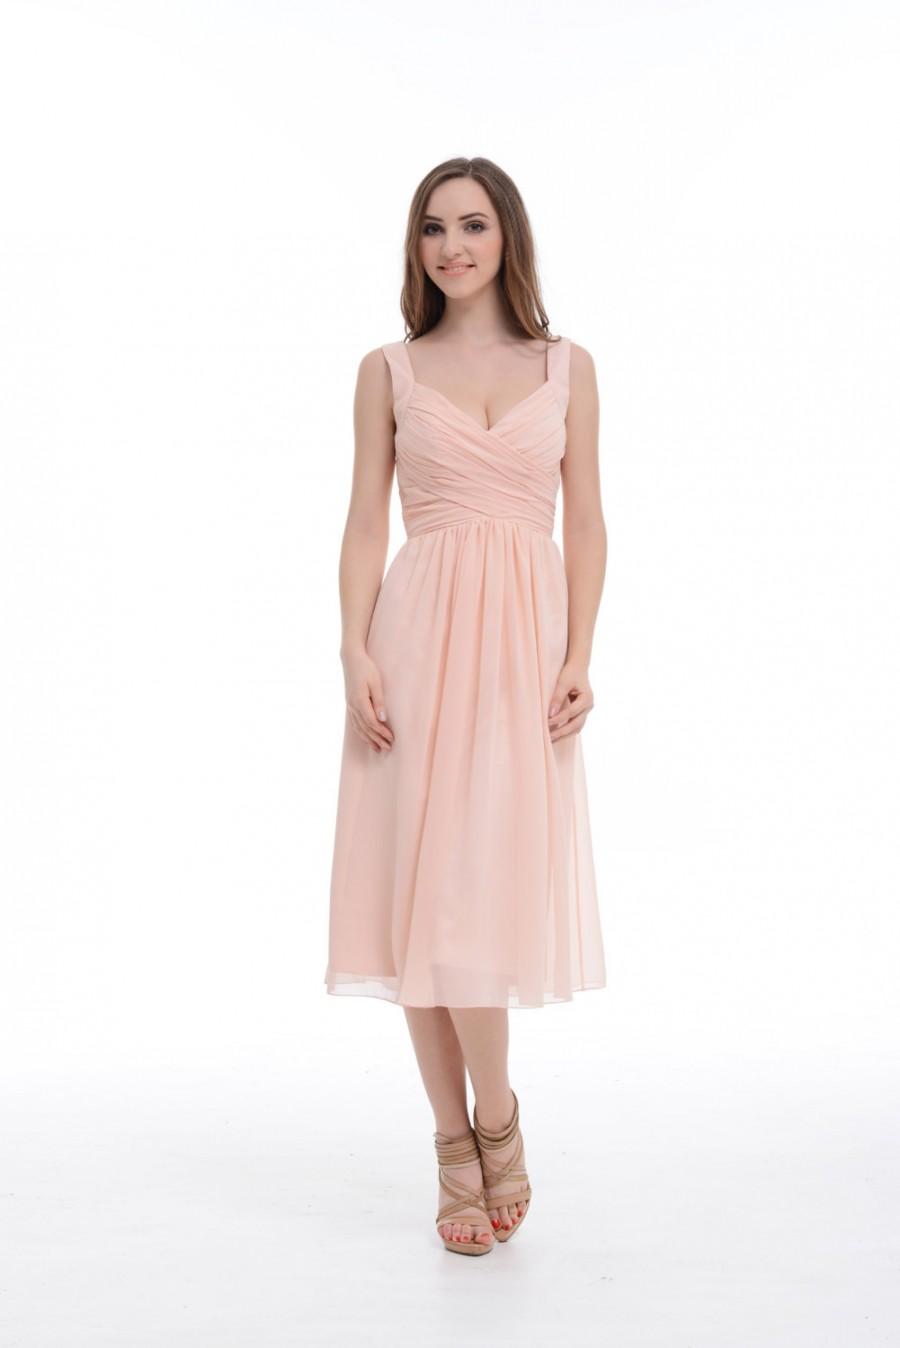 Mariage - Pearl Pink A-Line/Princess V-neck Tea-Length Spaghetti Straps Chiffon Bridesmaid Dress/Homecoming Dress/Prom Dress With Ruffle